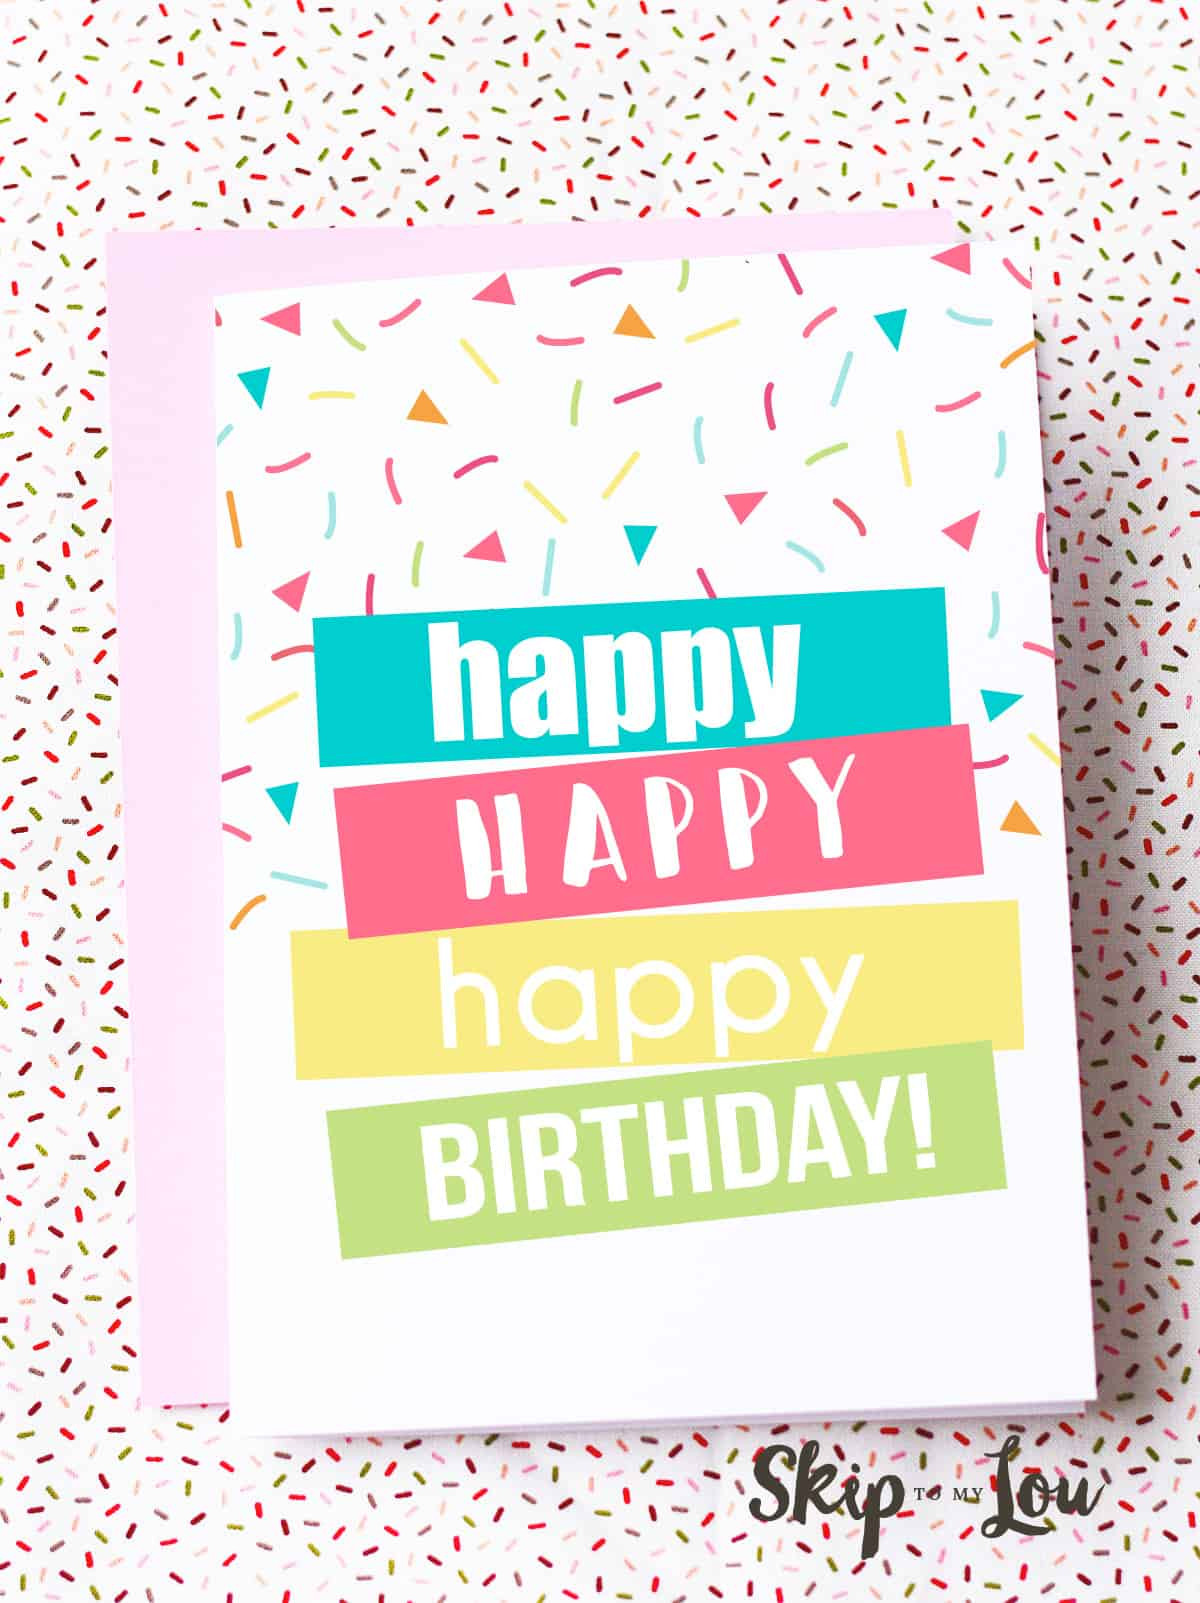 Free Funny Printable Birthday Cards
 Free Printable Birthday Cards